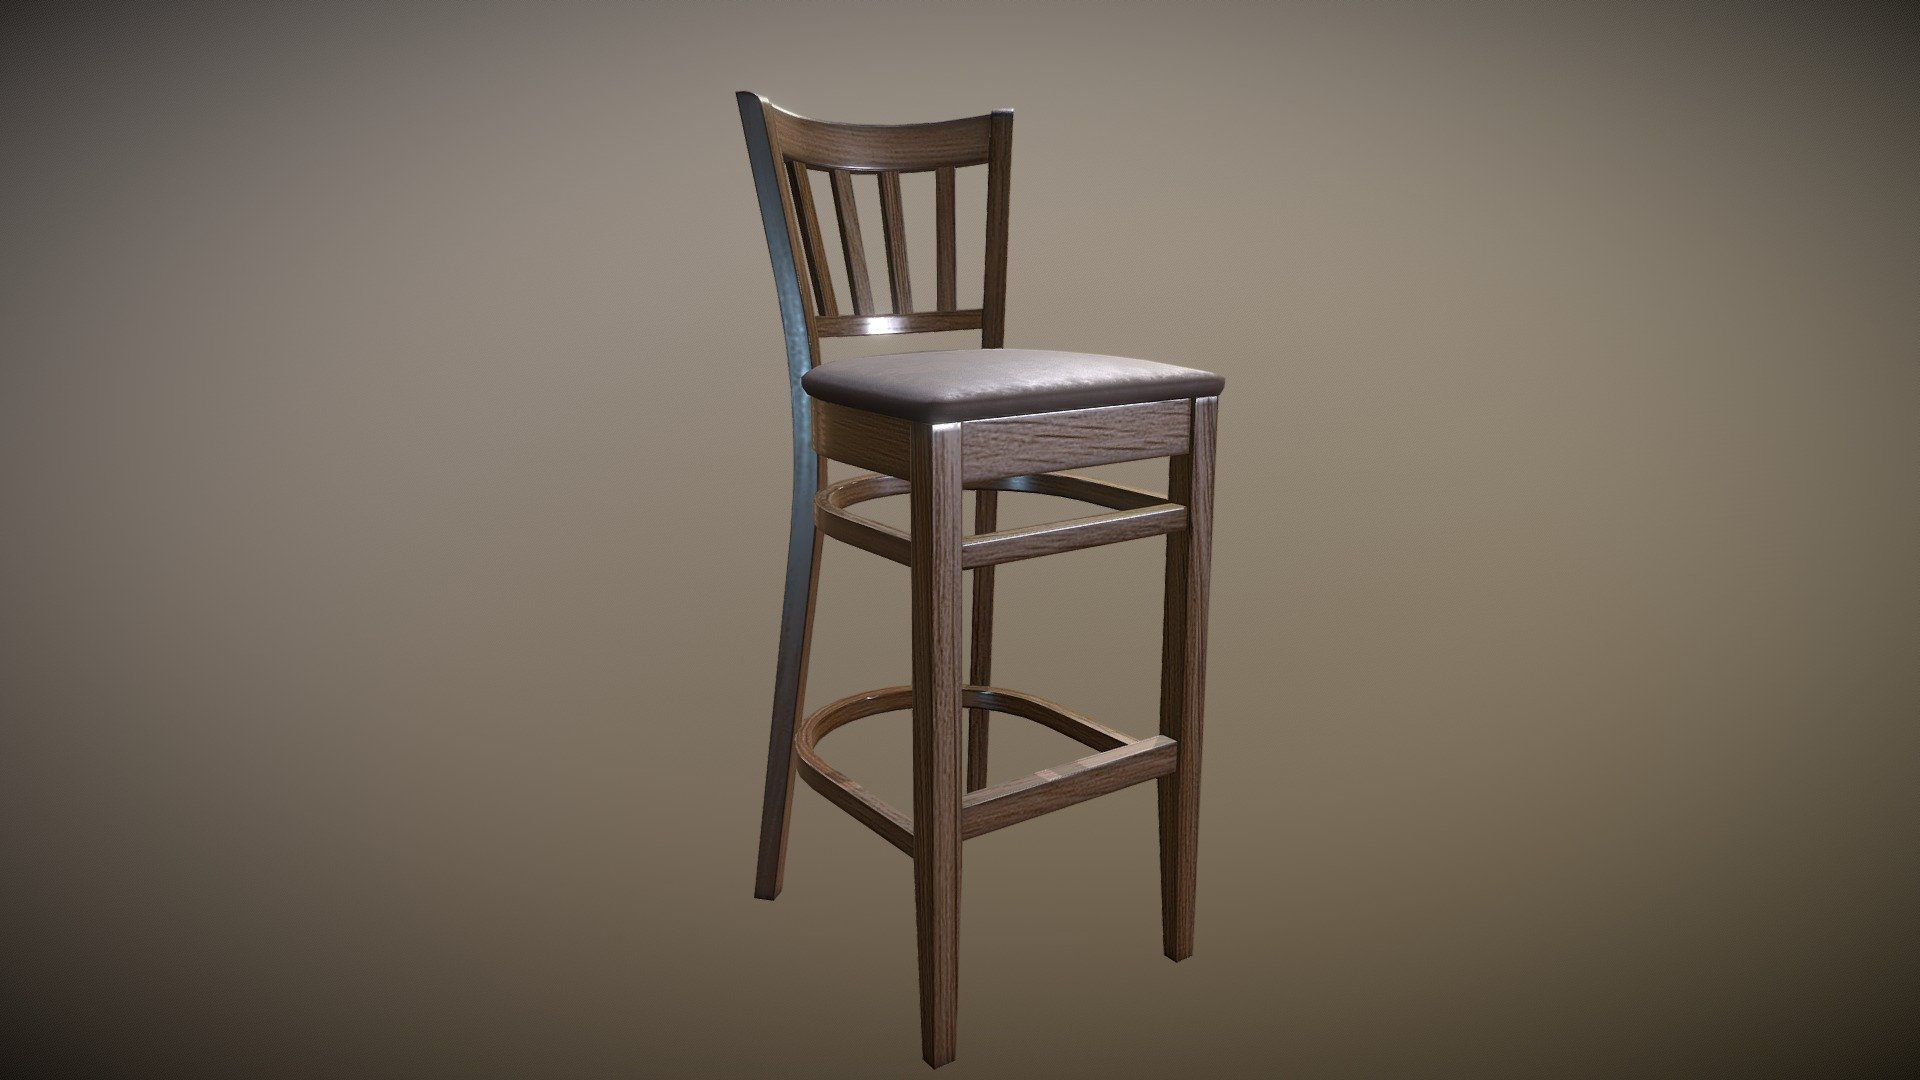 Chair - 3D model by chris_models 3d model